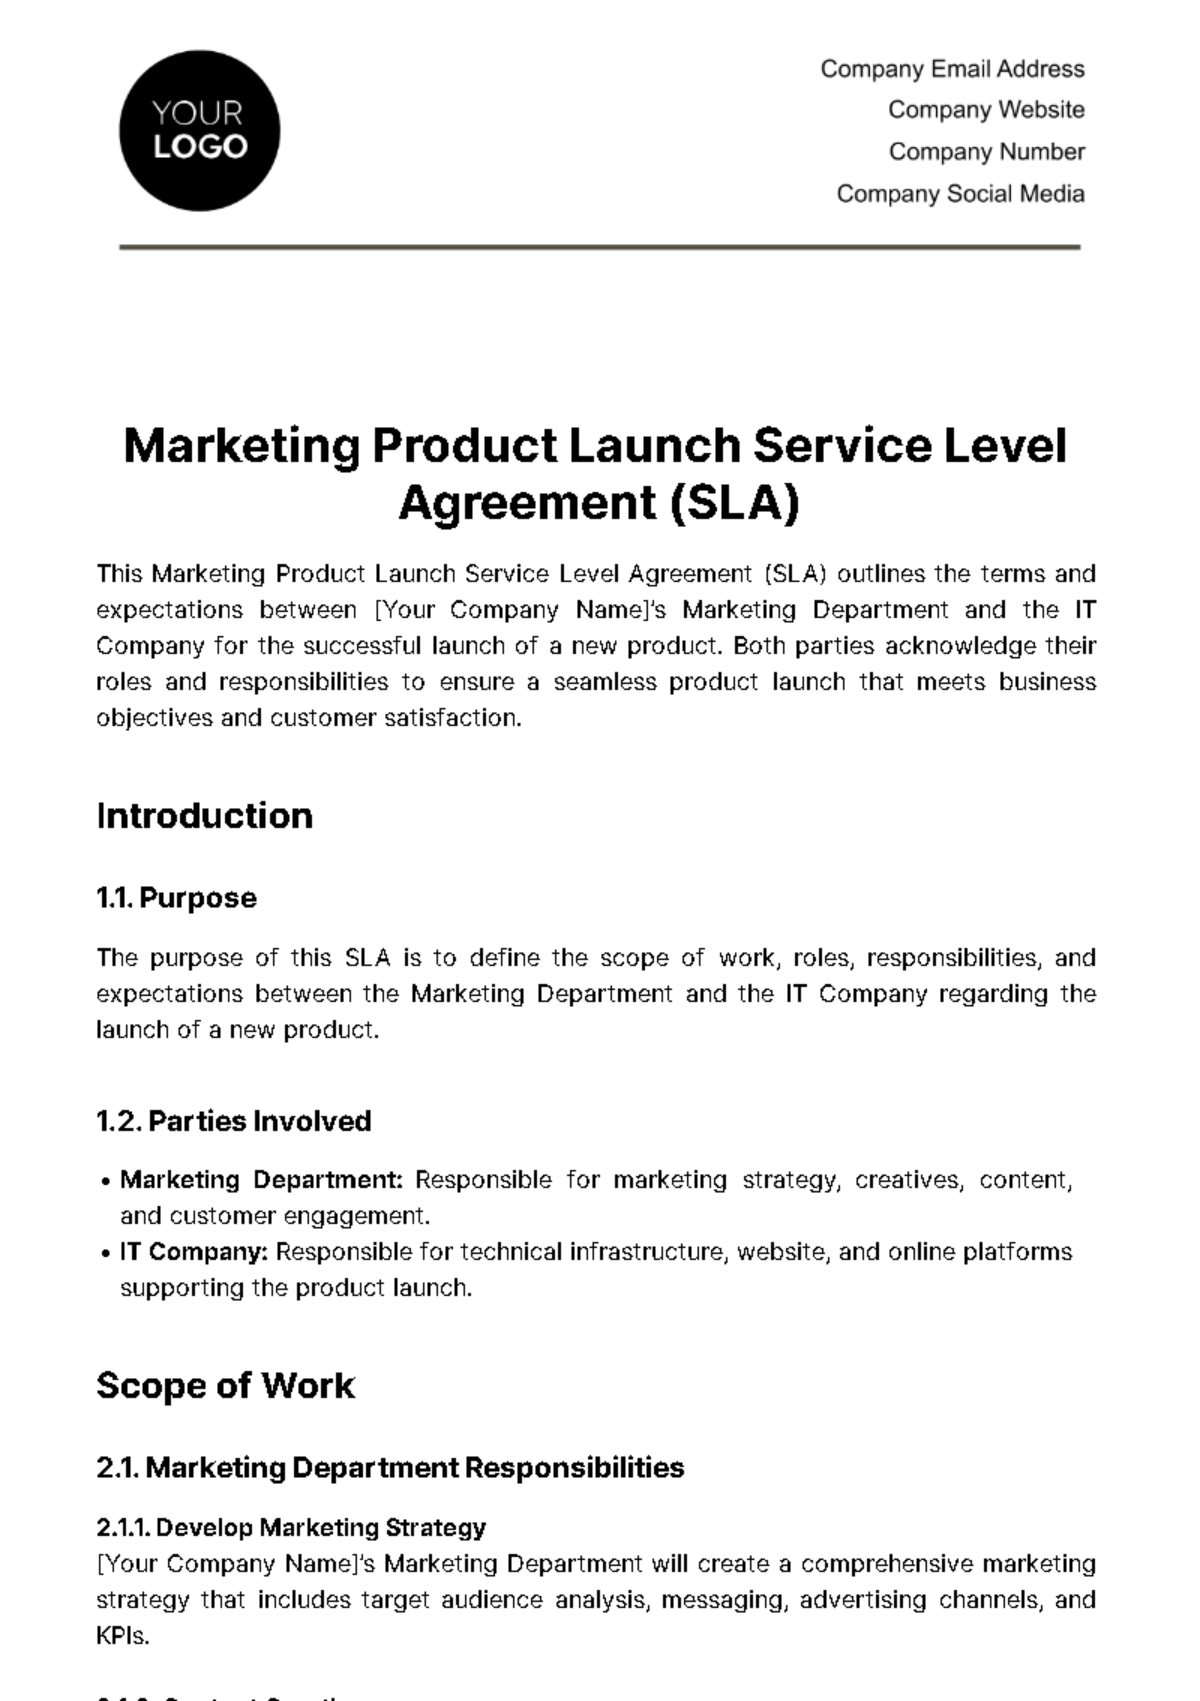 Free Marketing Product Launch SLA Template